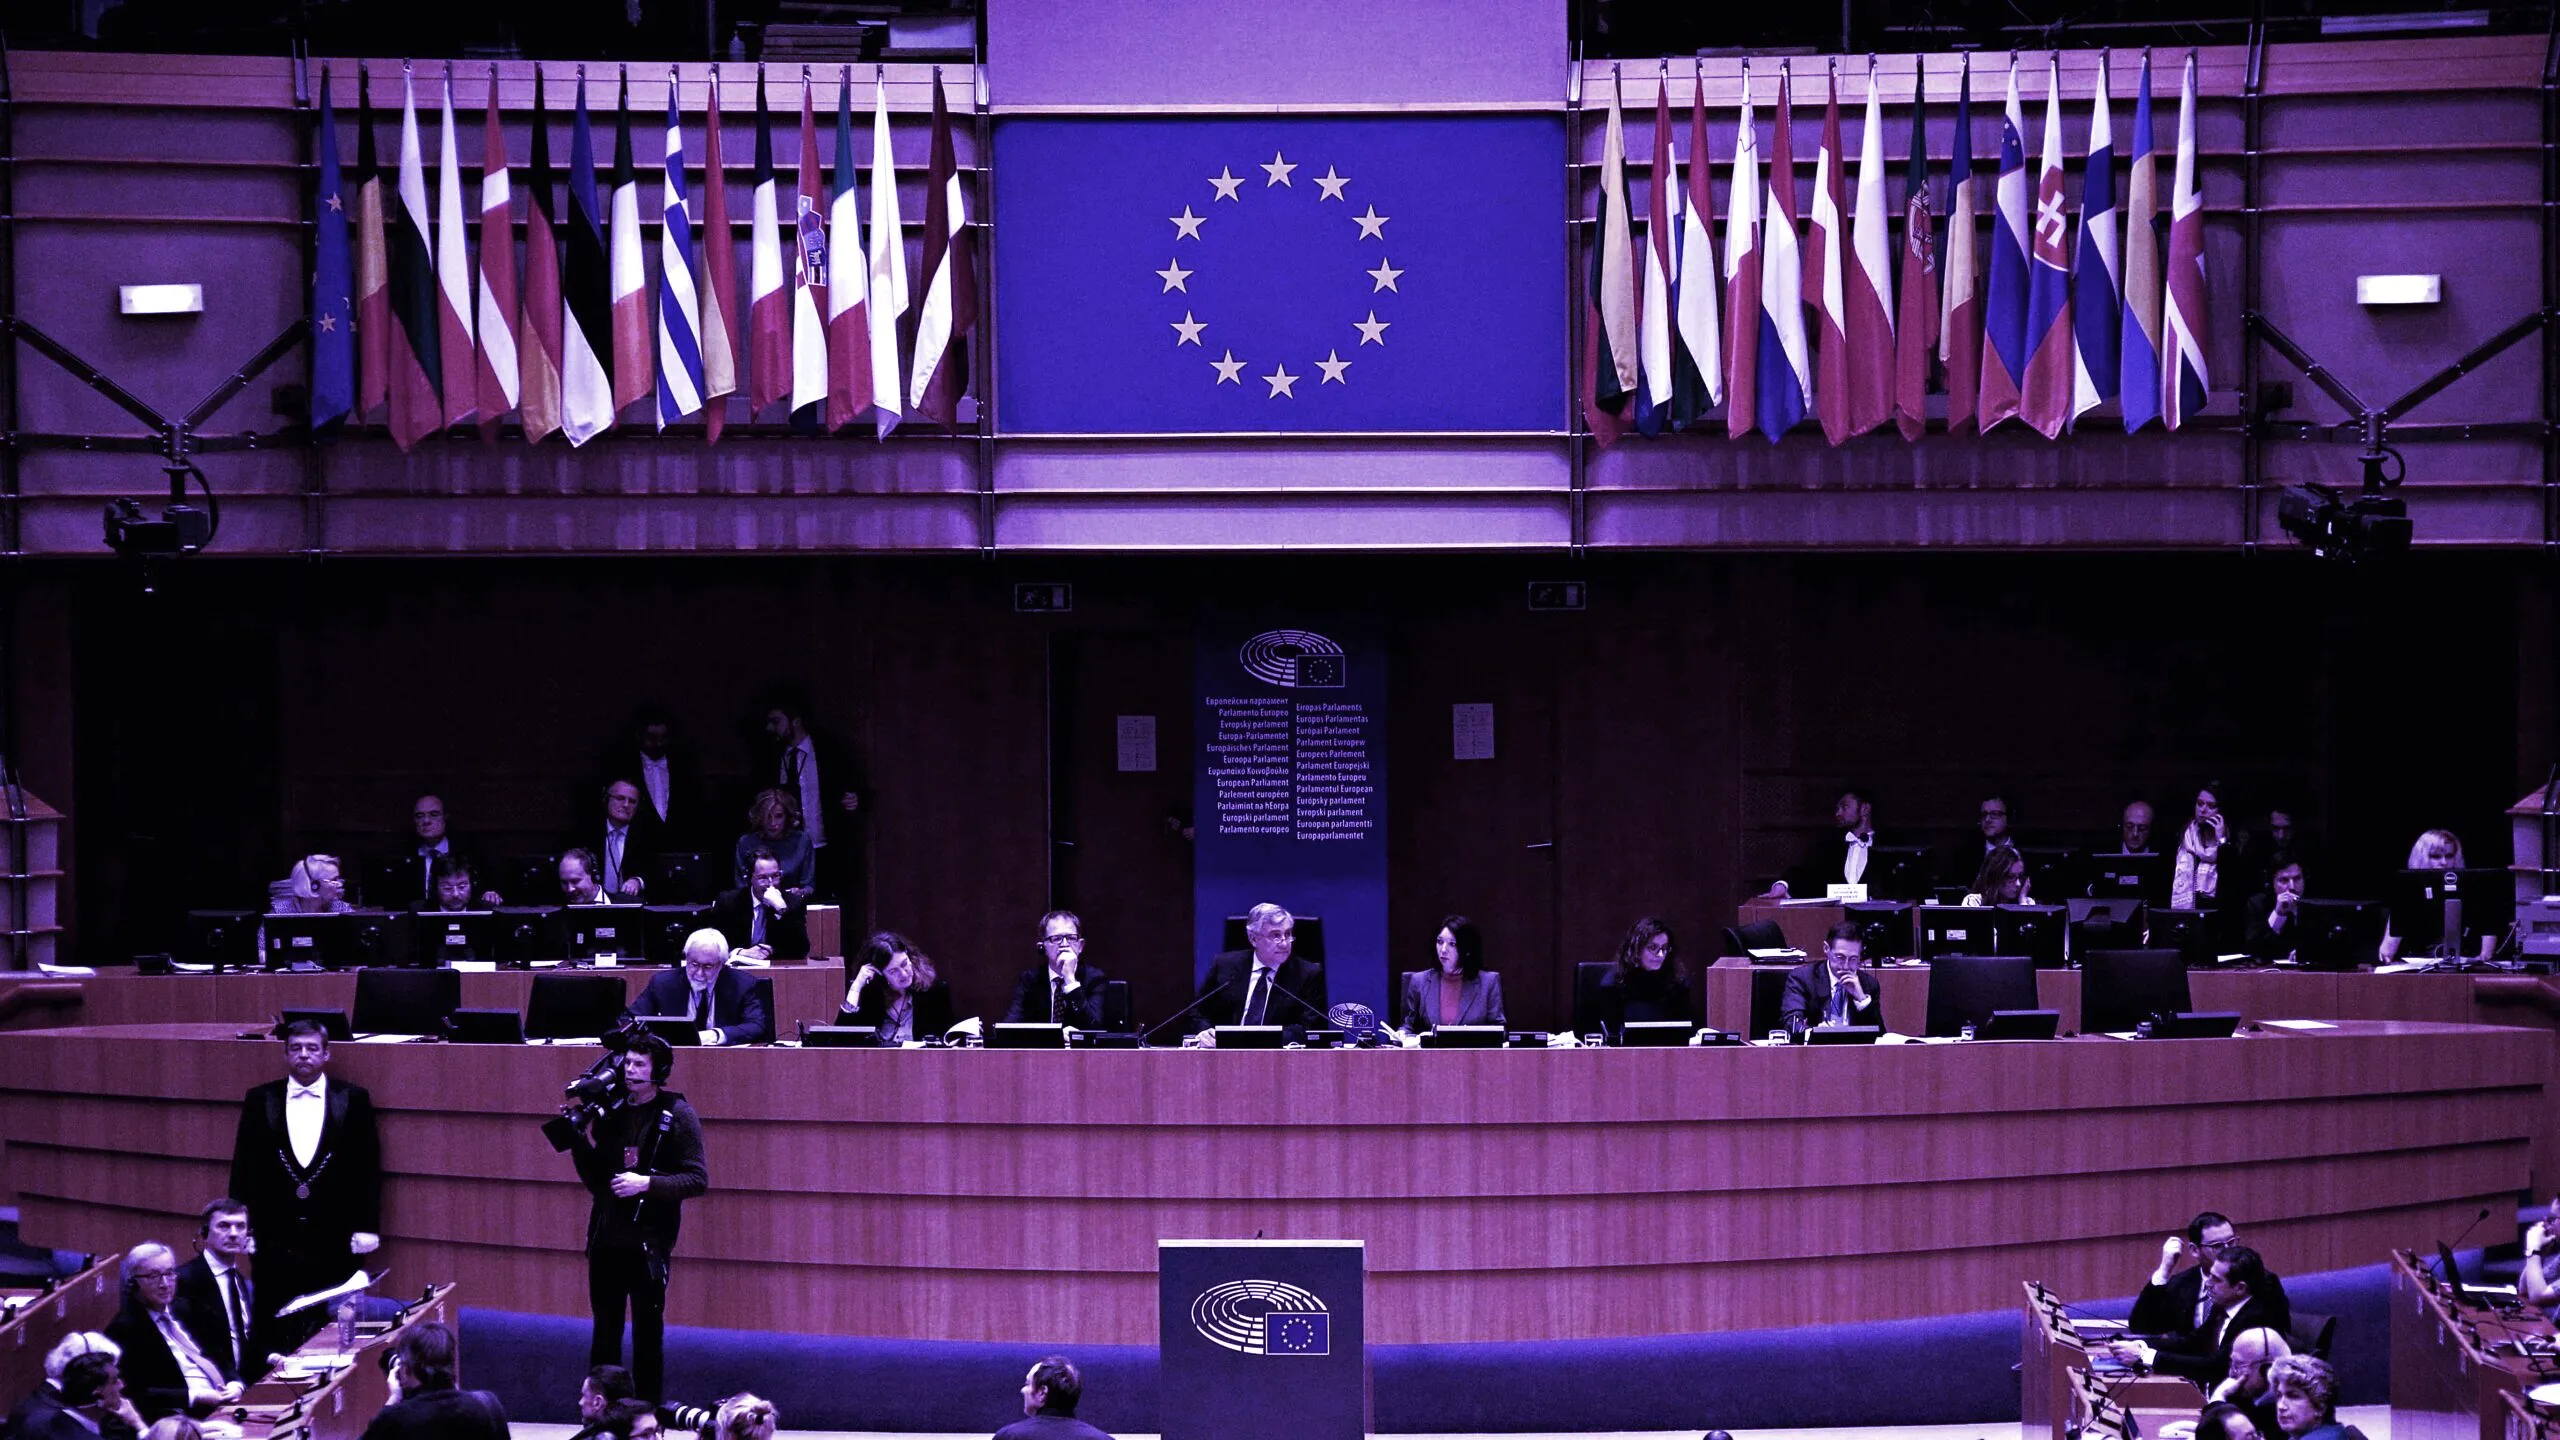 A European Parliament meeting in progress. Image: Shutterstock